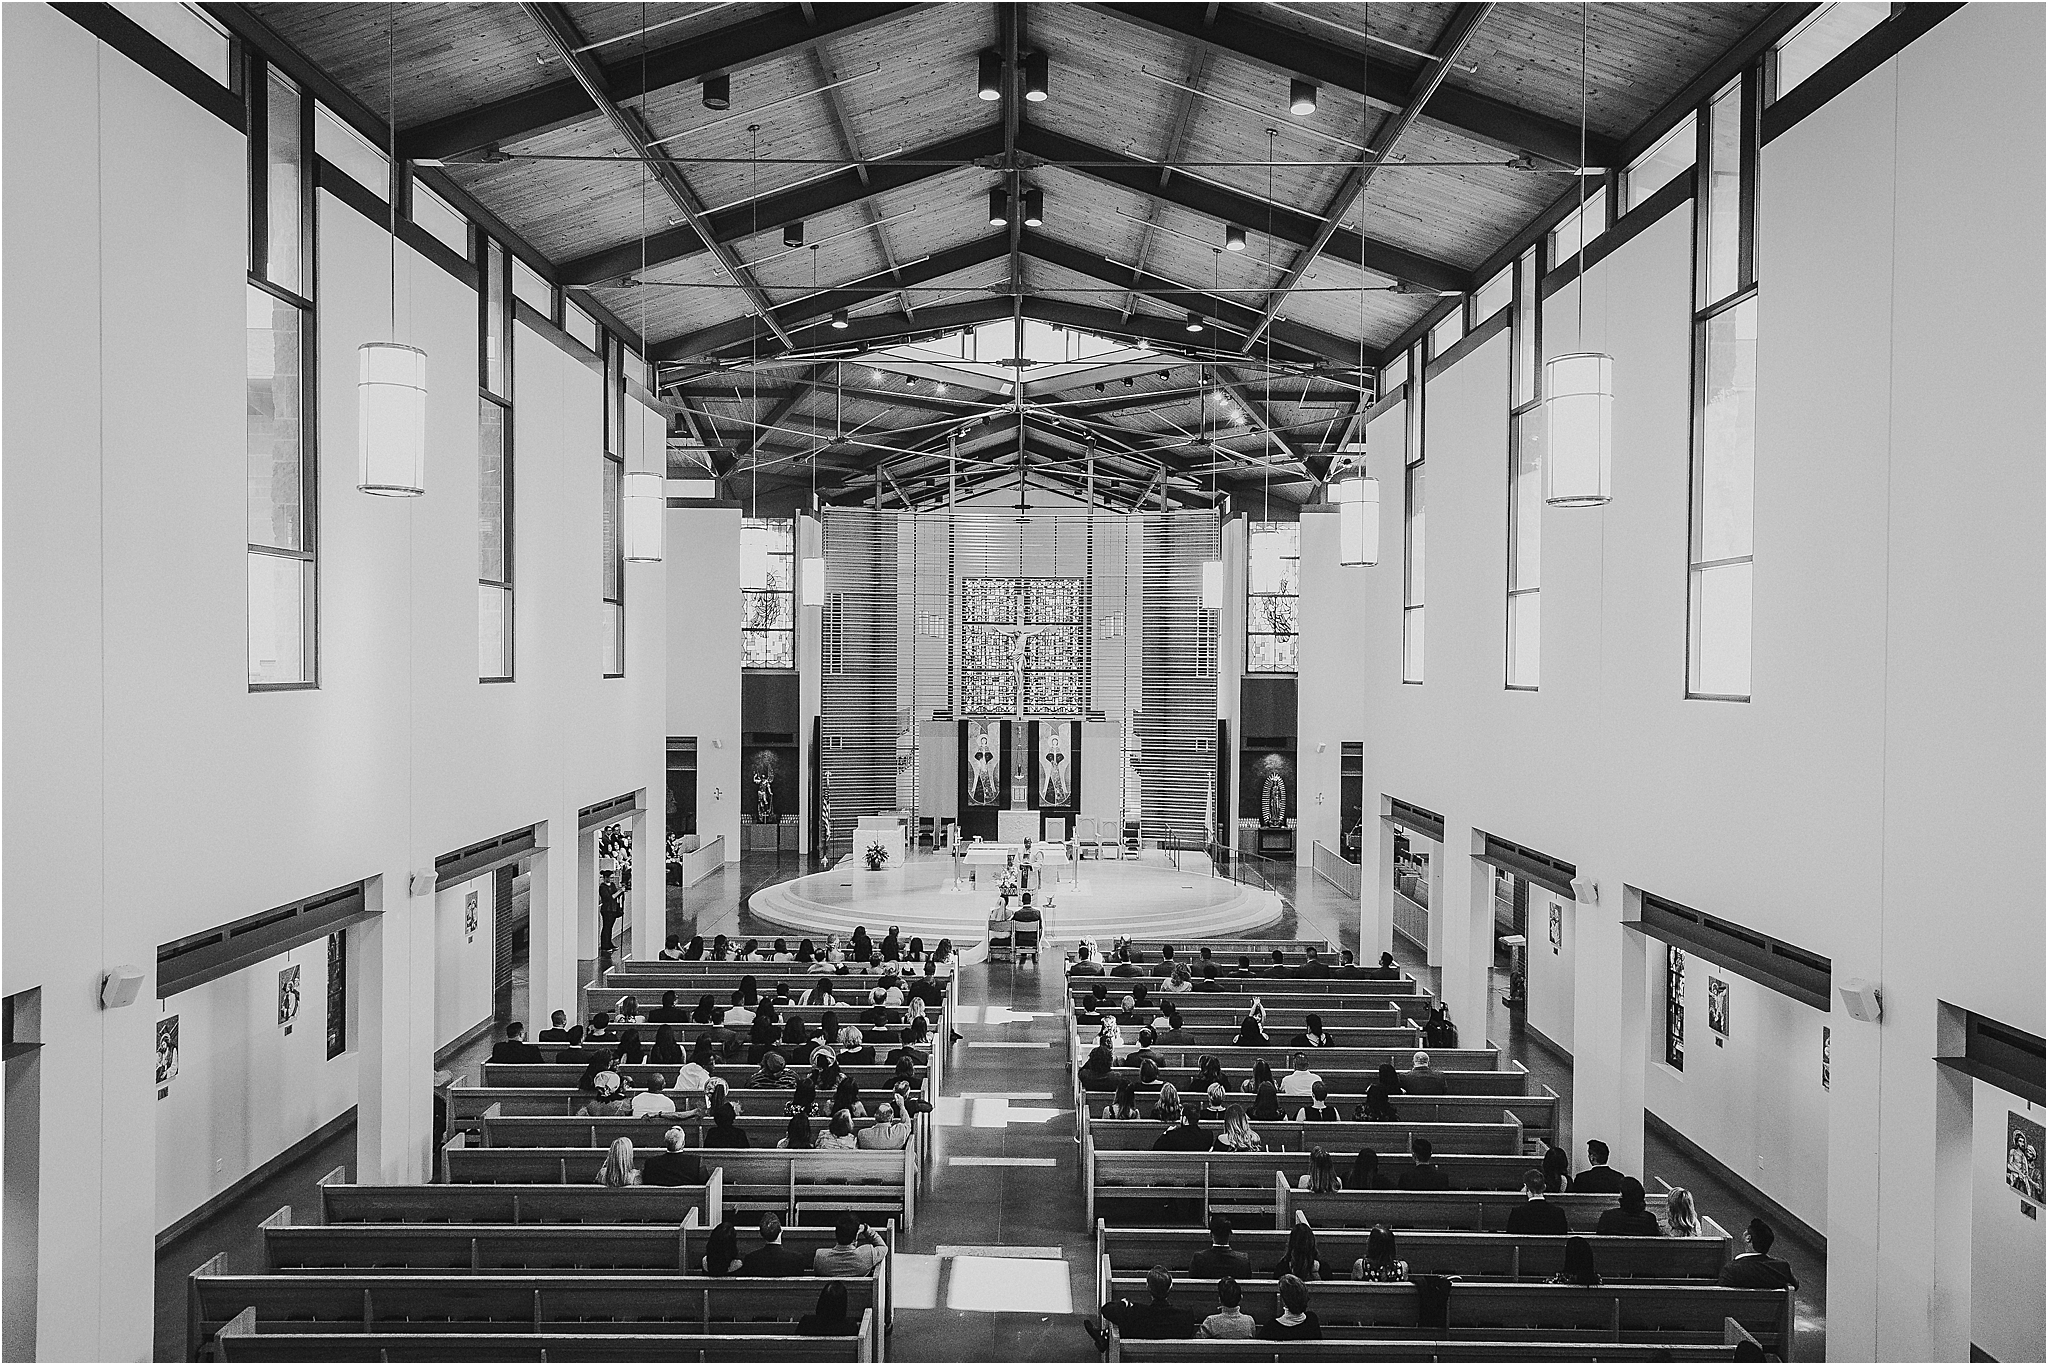 Fall Wedding Ceremony at St. Michaels in McKinney, Texas By Dallas Wedding Photographer Jillian Hogan 